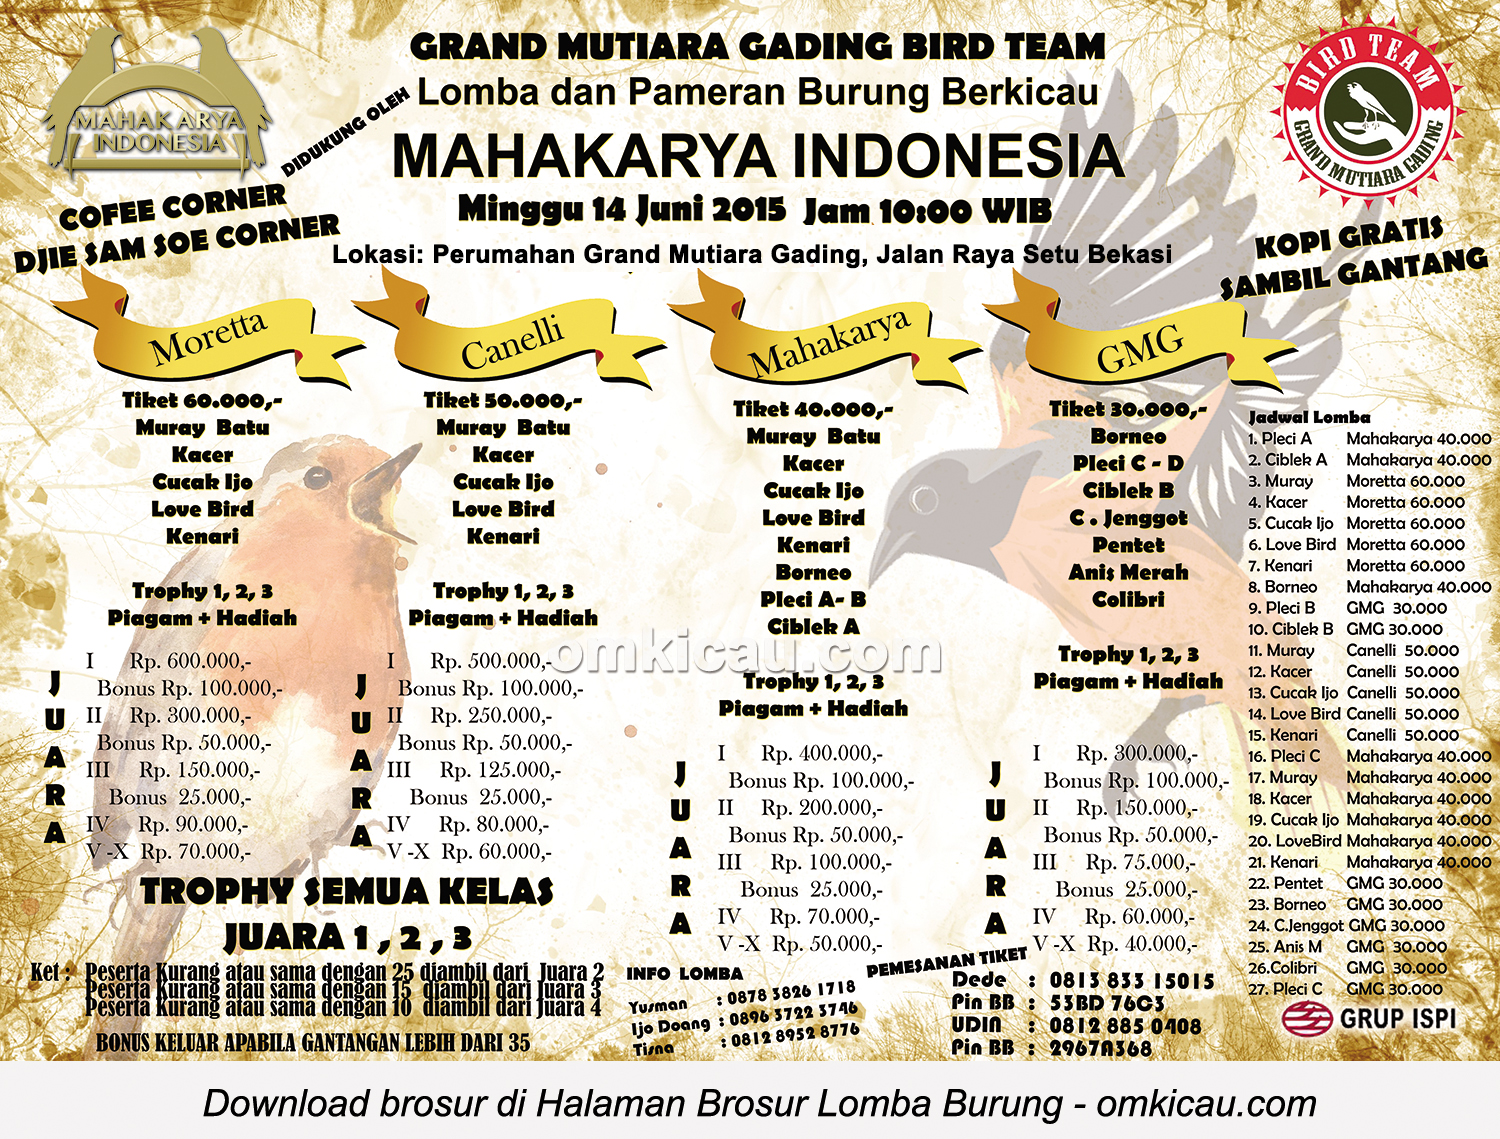 Brosur Lomba Burung Berkicau Mahakarya Indonesia-GMG Bird Team, Bekasi, 14 Juni 2015